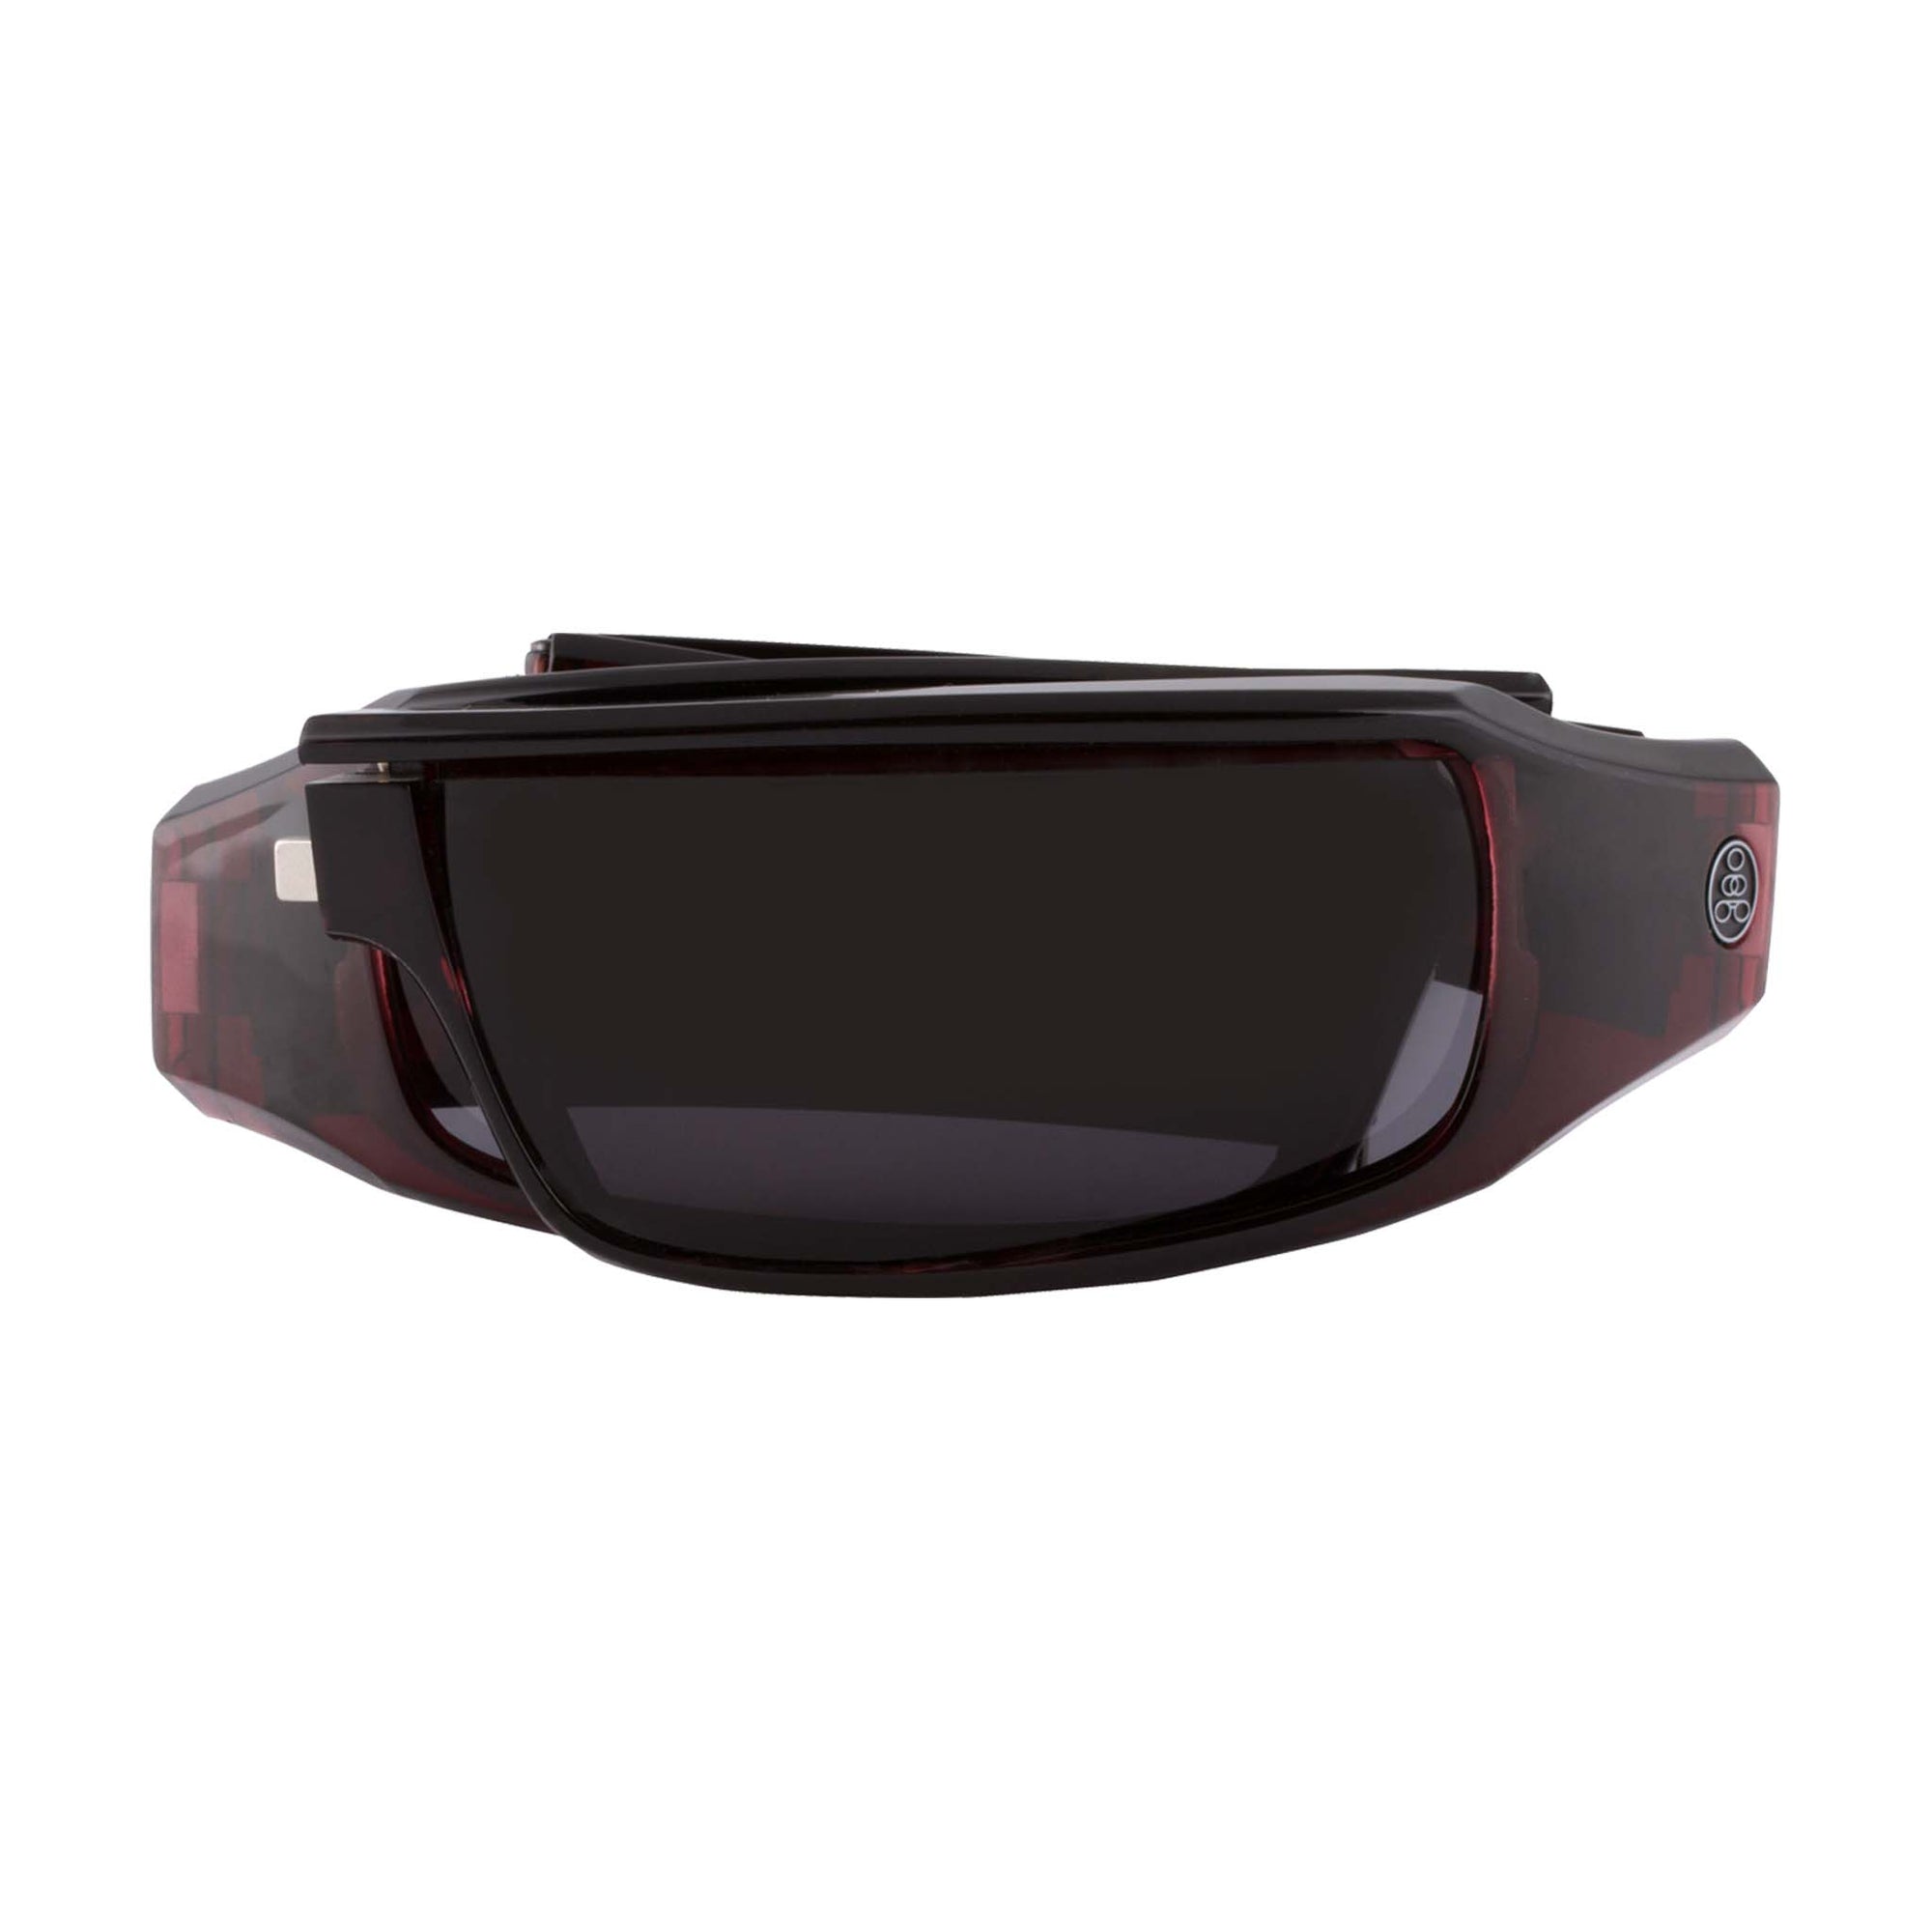 Popticals, Premium Compact Sunglasses, PopSign, 030020-LFGP, Polarized Sunglasses, Gloss Wine/Black Crystal Frame, Gray Lenses, Compact View